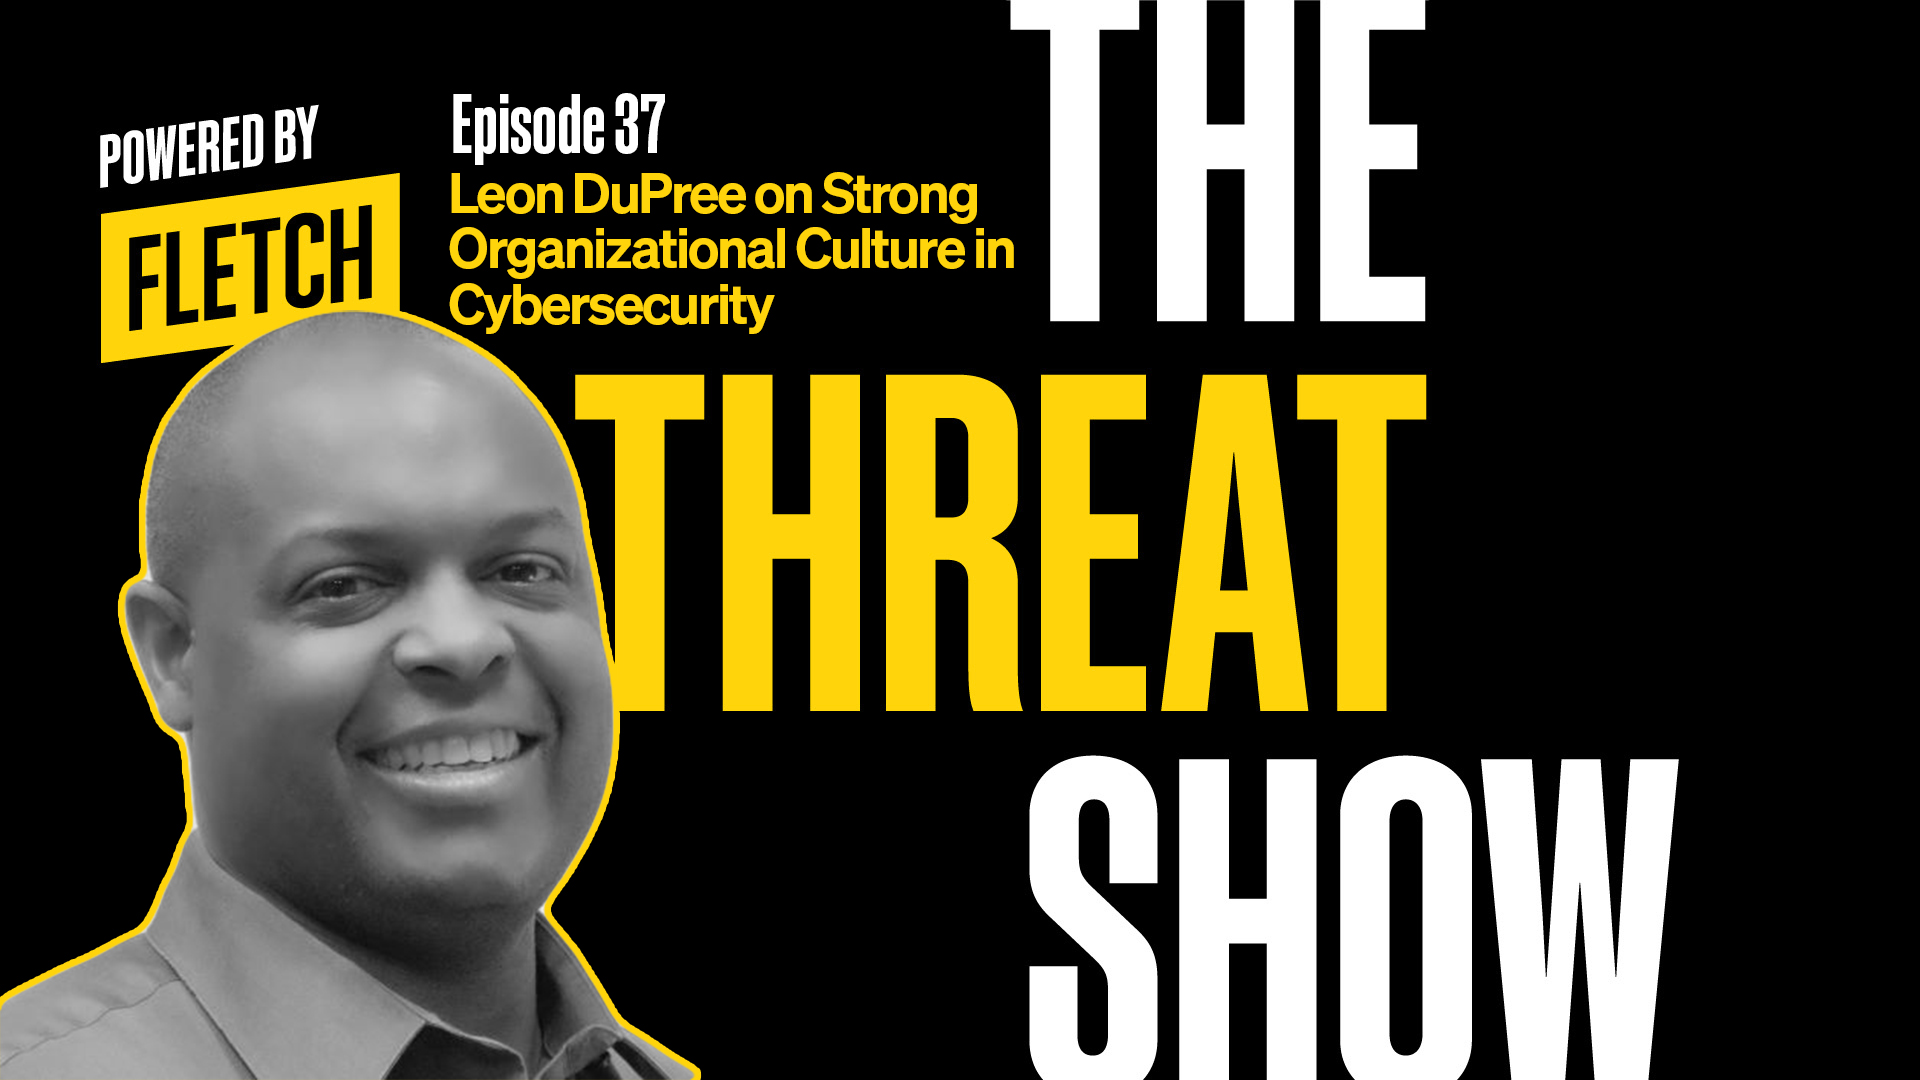 The Threat Show Ep. 37 w/ Leon DuPree